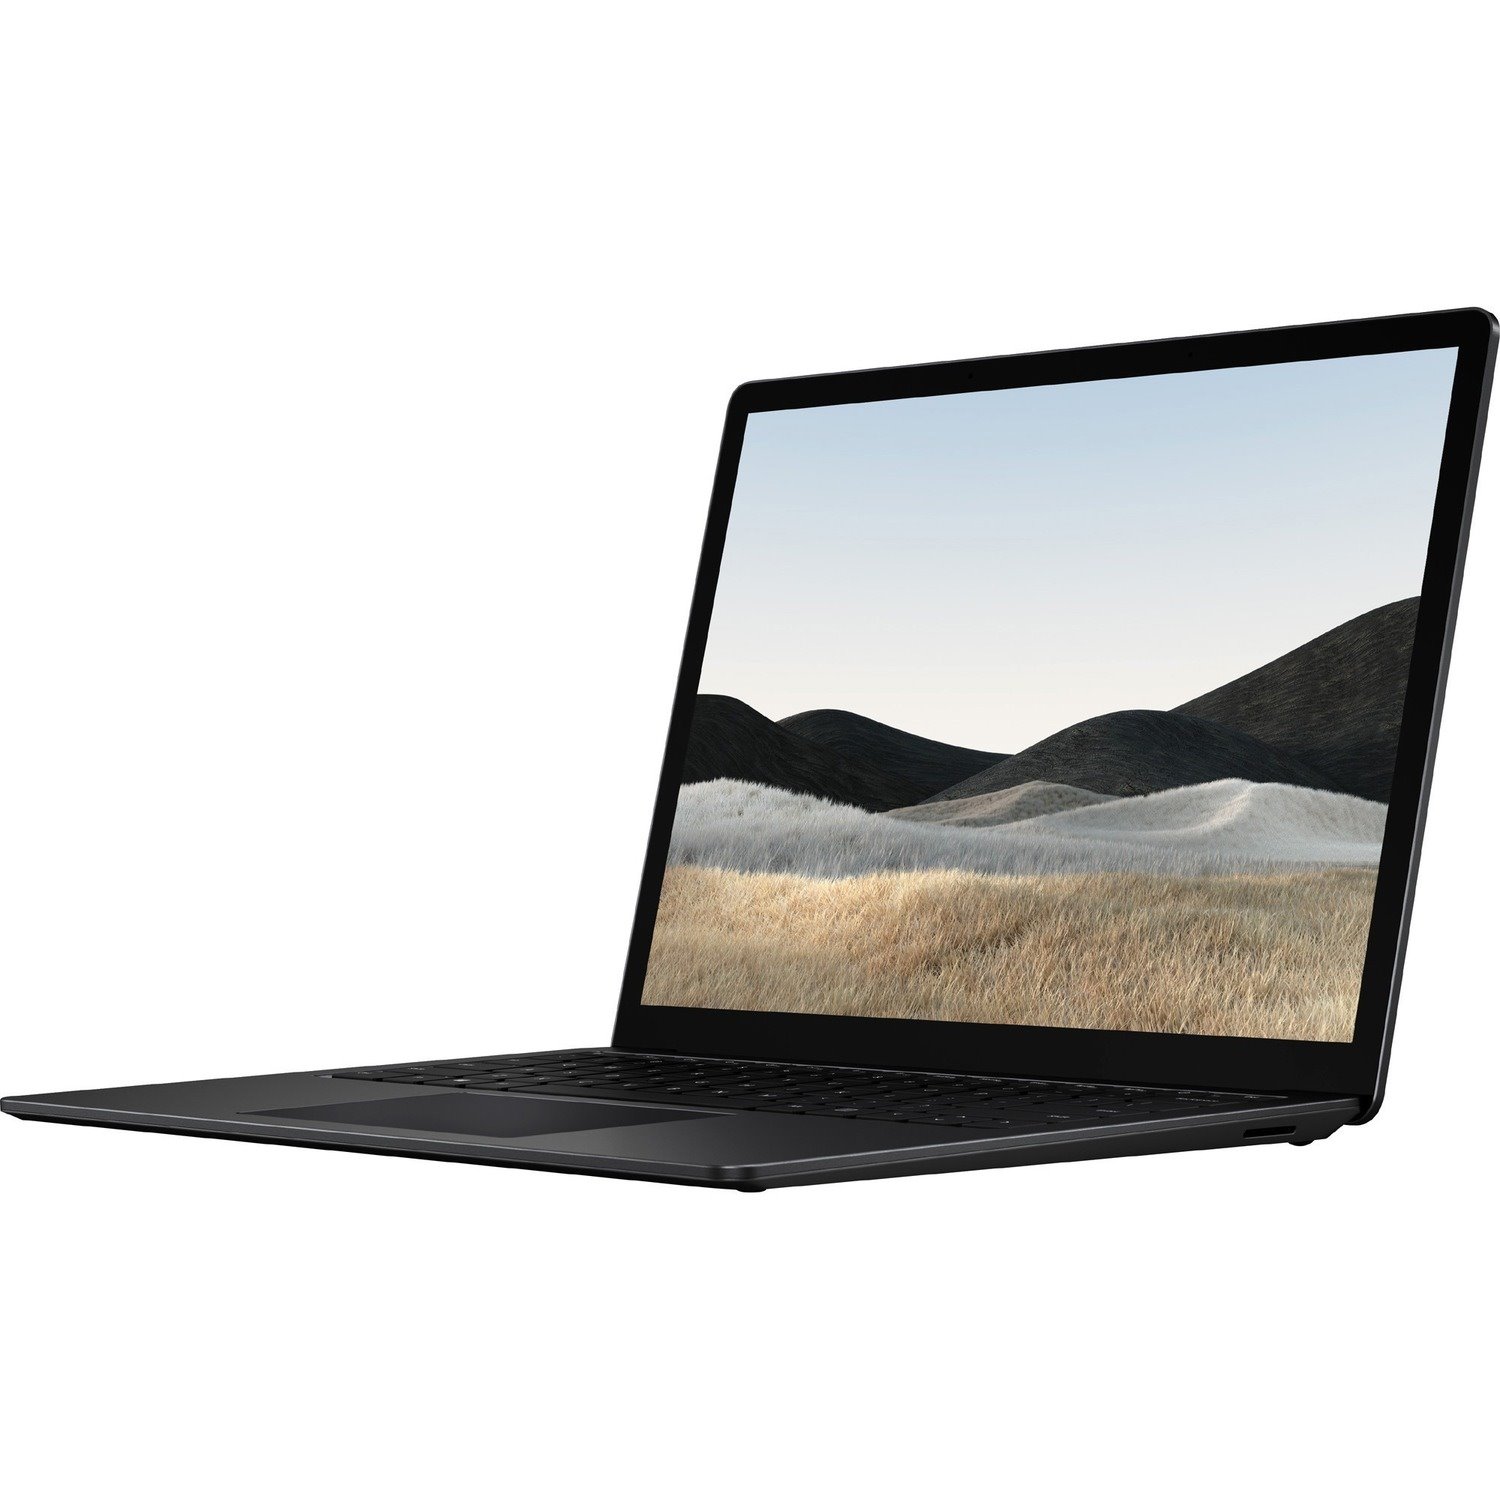 Microsoft Surface Laptop 4 13.5" Touchscreen Notebook - Intel Core i5 11th Gen - 16 GB - 256 GB SSD - Matte Black